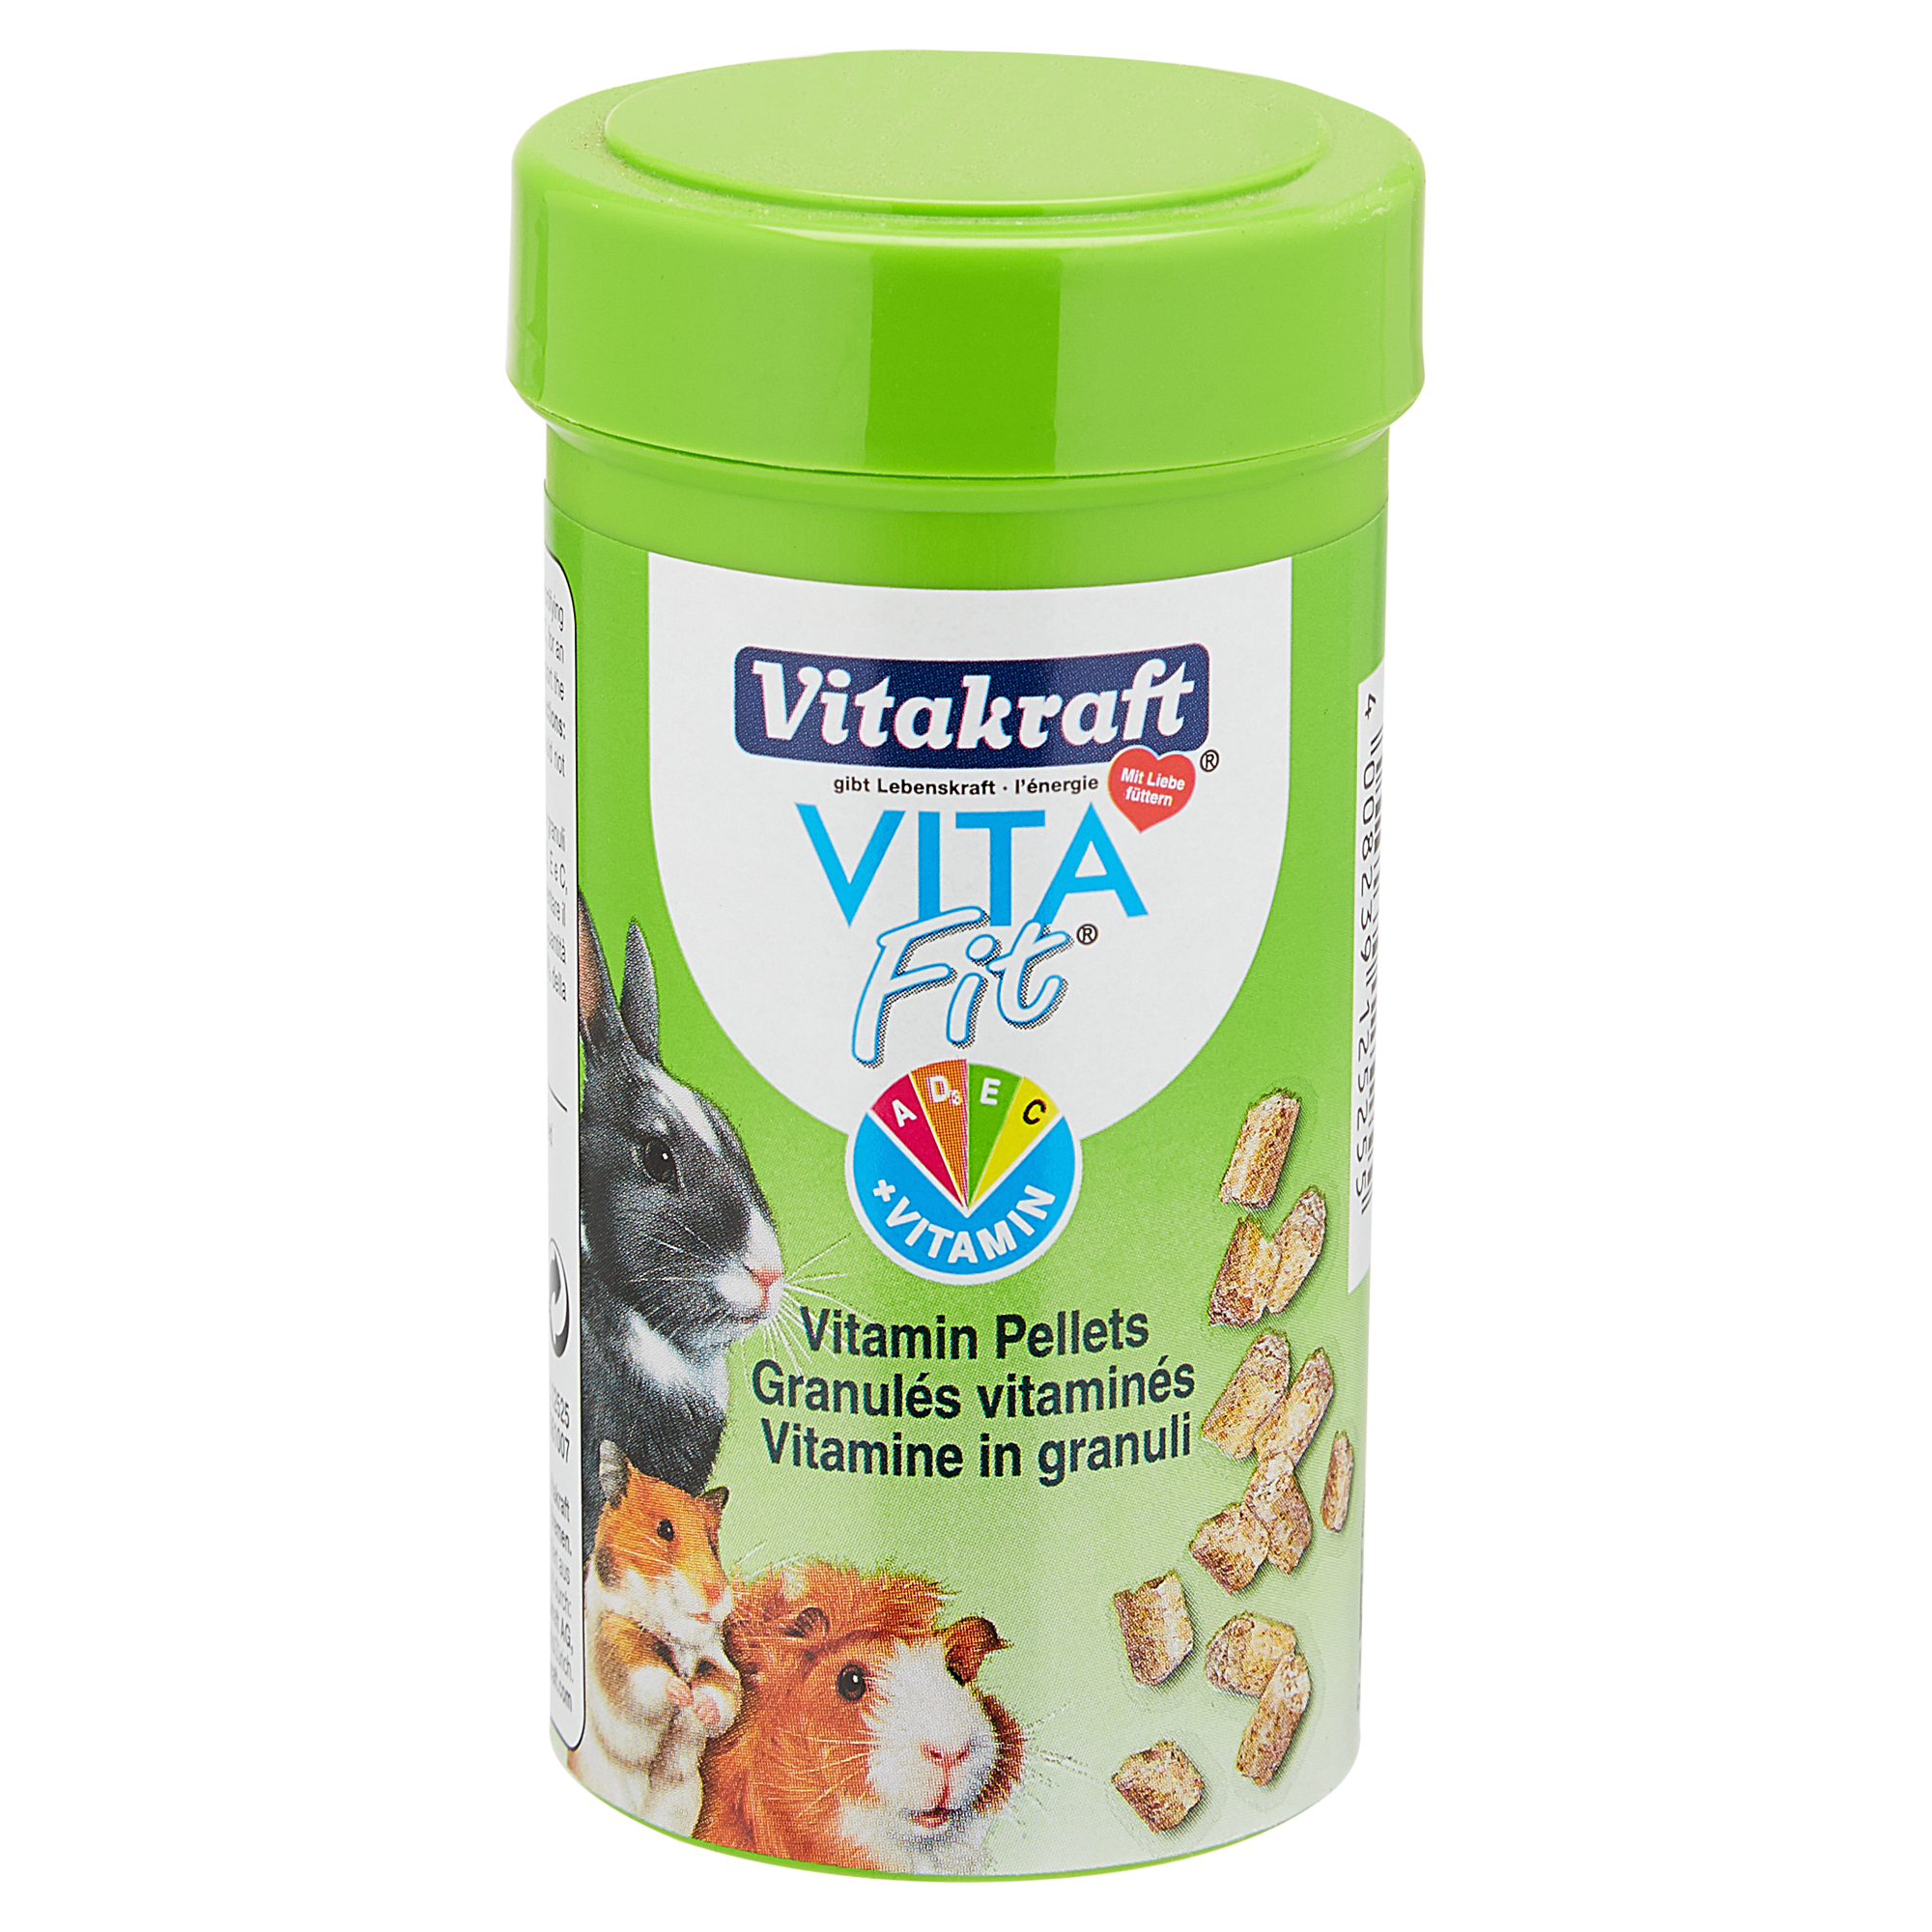 Vitamin-Pellets "Vita Fit" 50 g + product picture